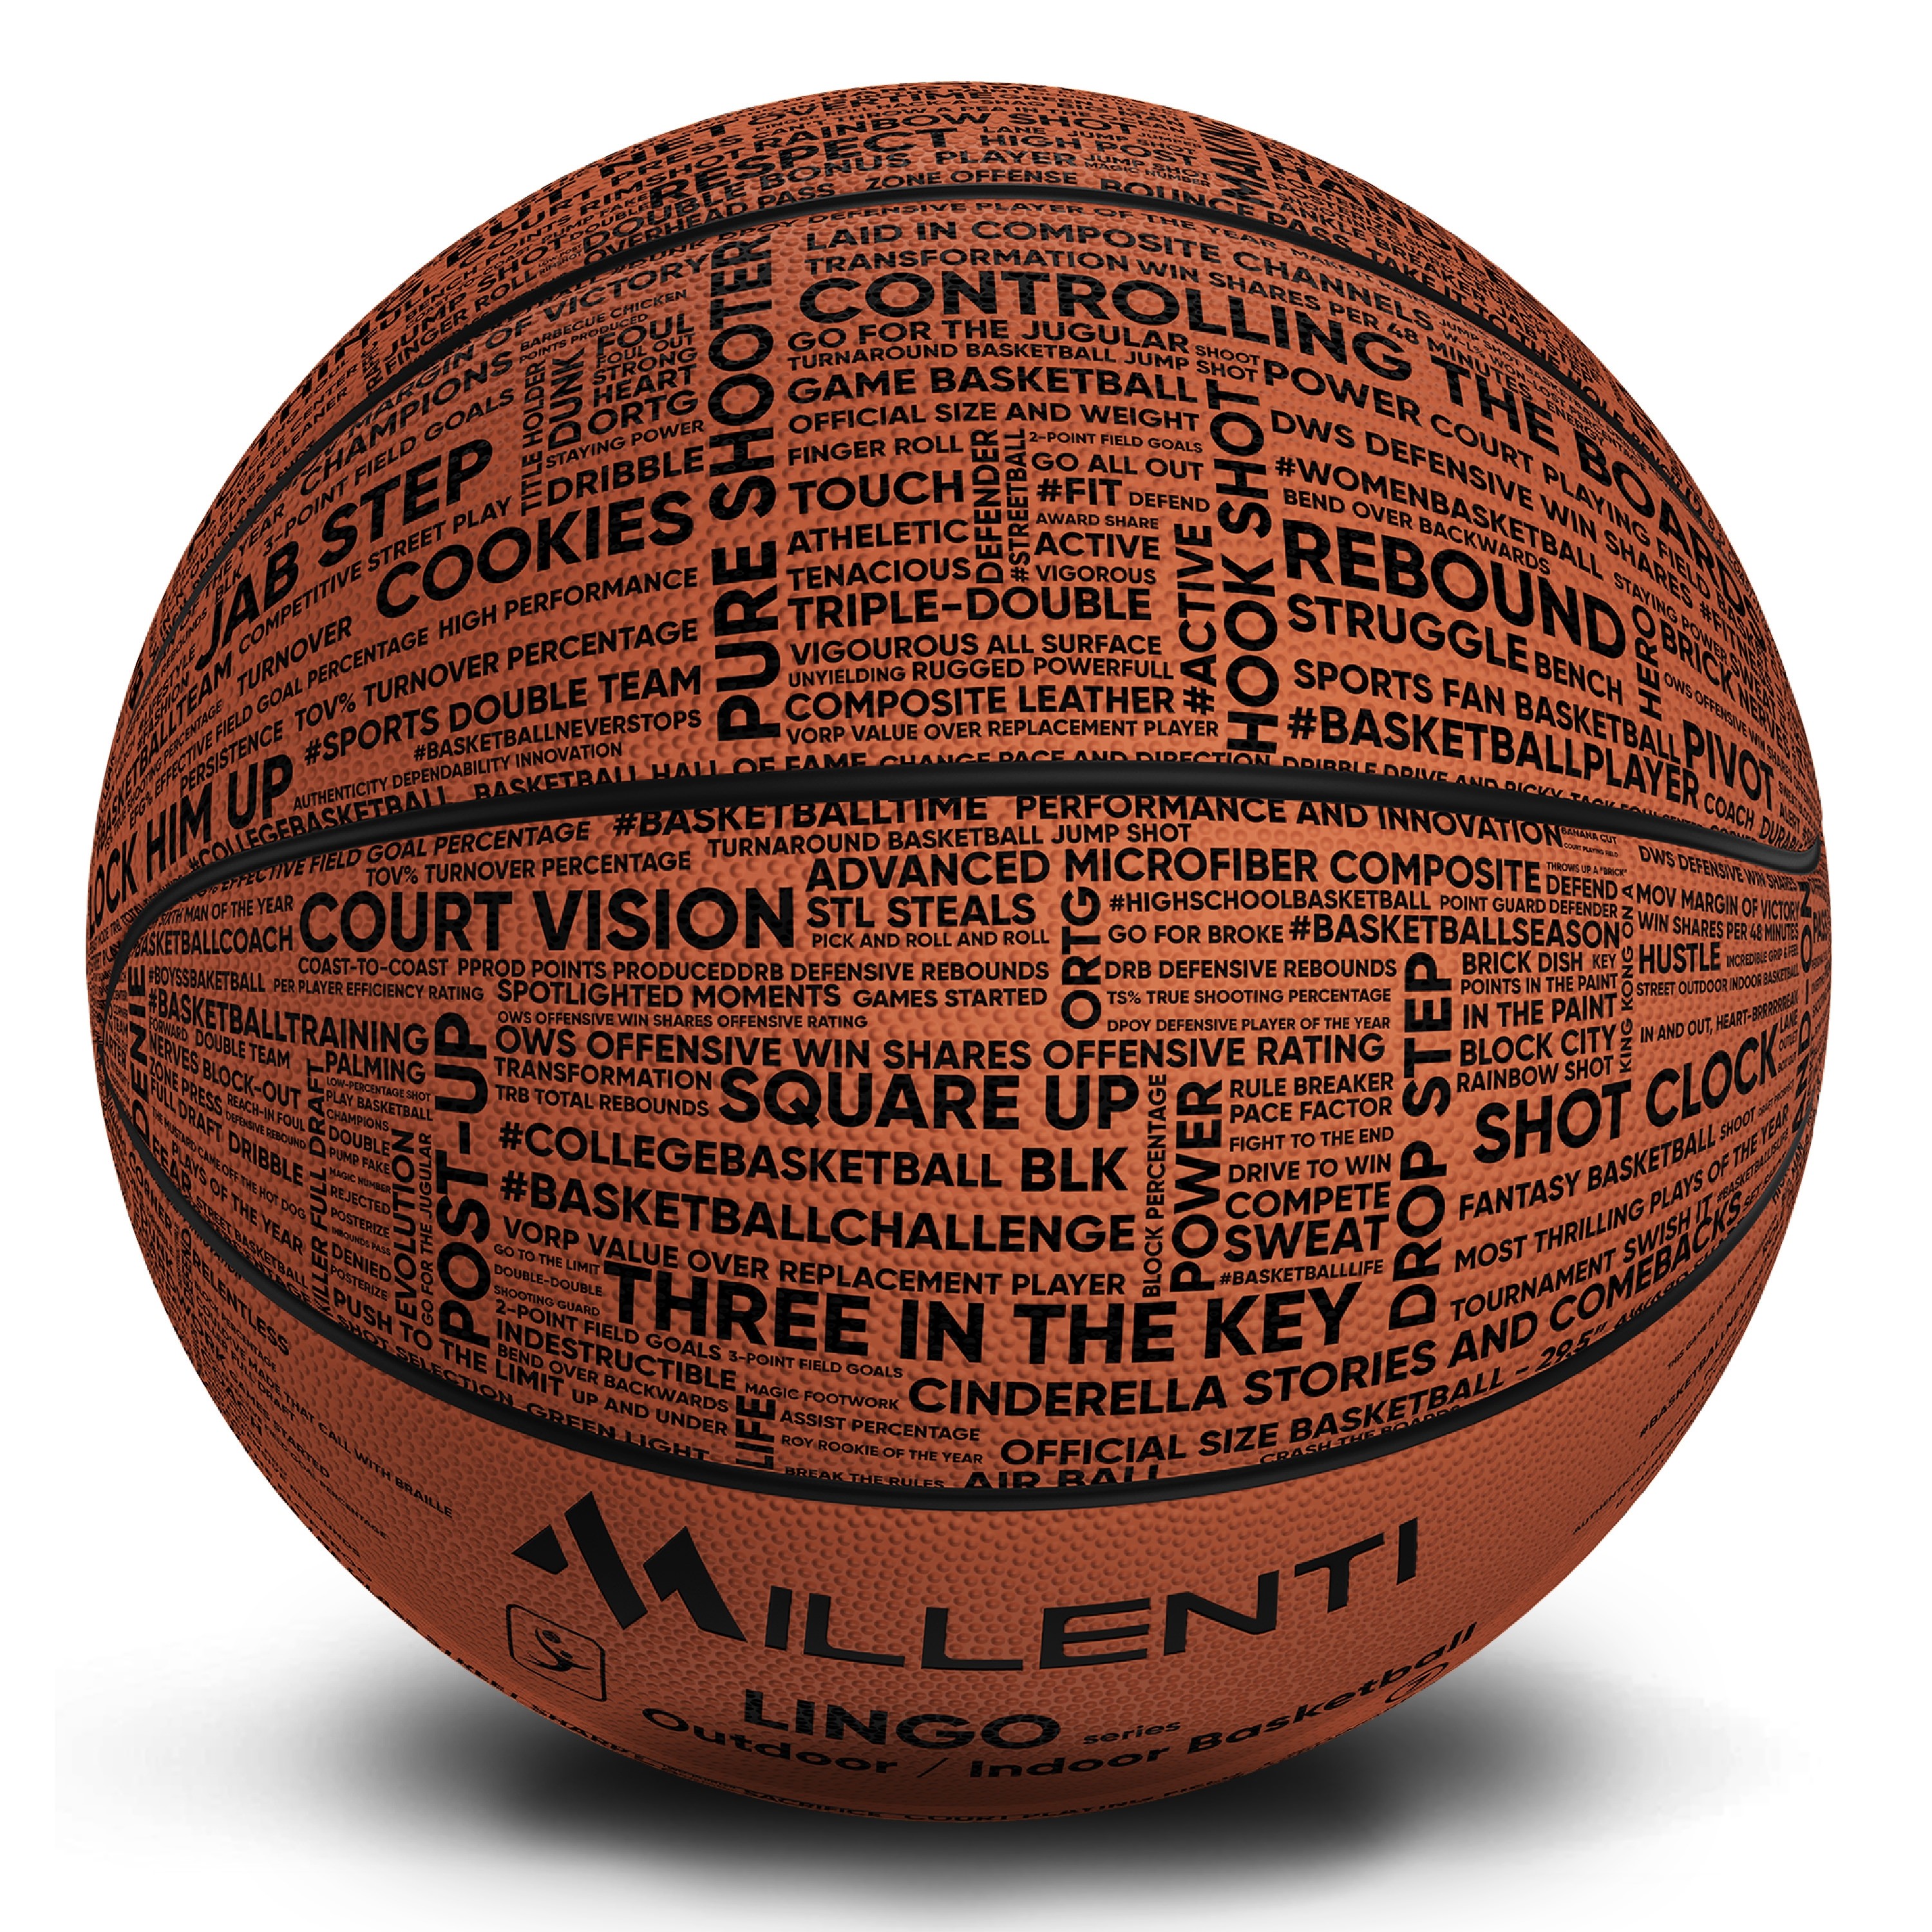 Millenti Street-Cred-Lingo Basketball Size 7 - Award Winning Design Chick Hearn Basketball Phrases. Worlds #1 Basketball-Language Streetball, Size 29.5 - Orange Basketball BB0107O